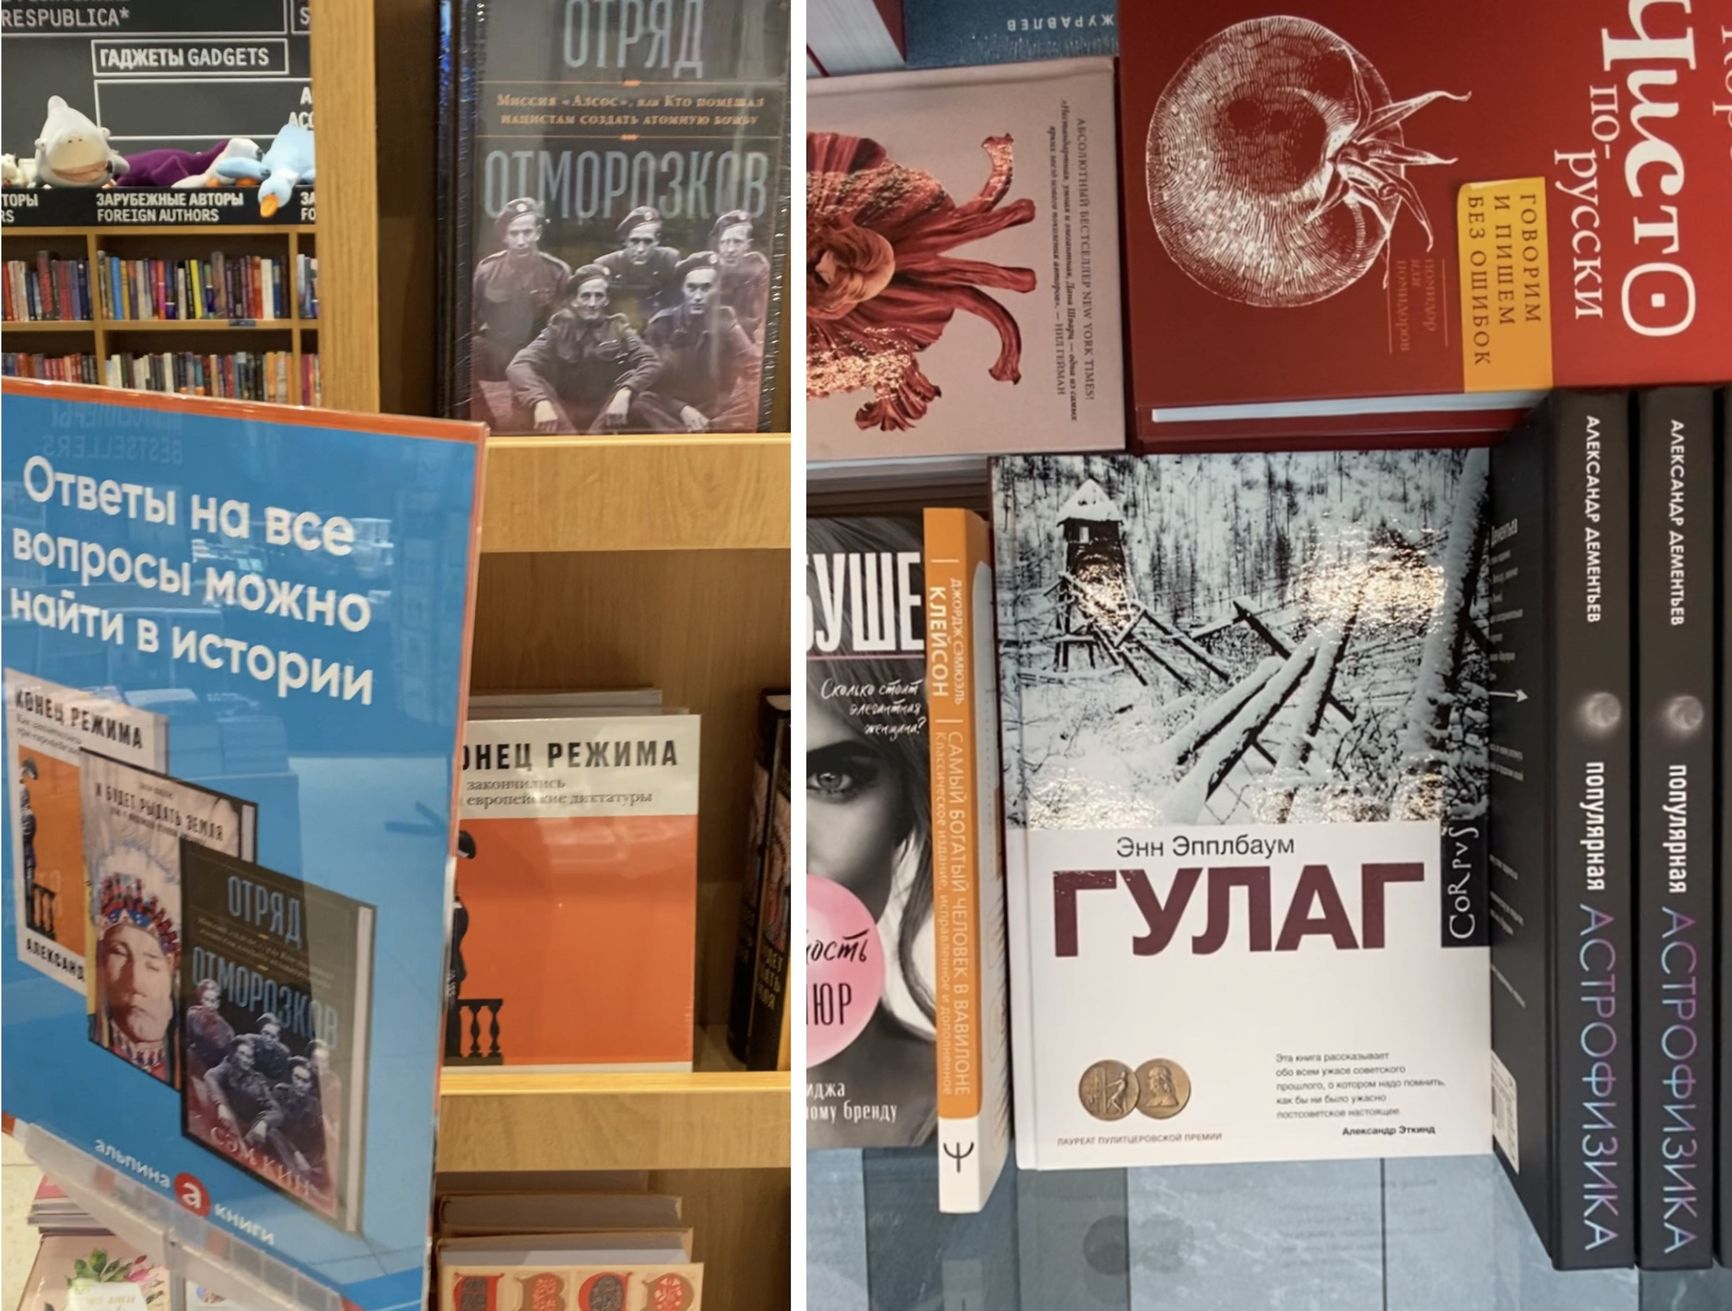 Book displays in Respublika and Chitai-Gorod stores